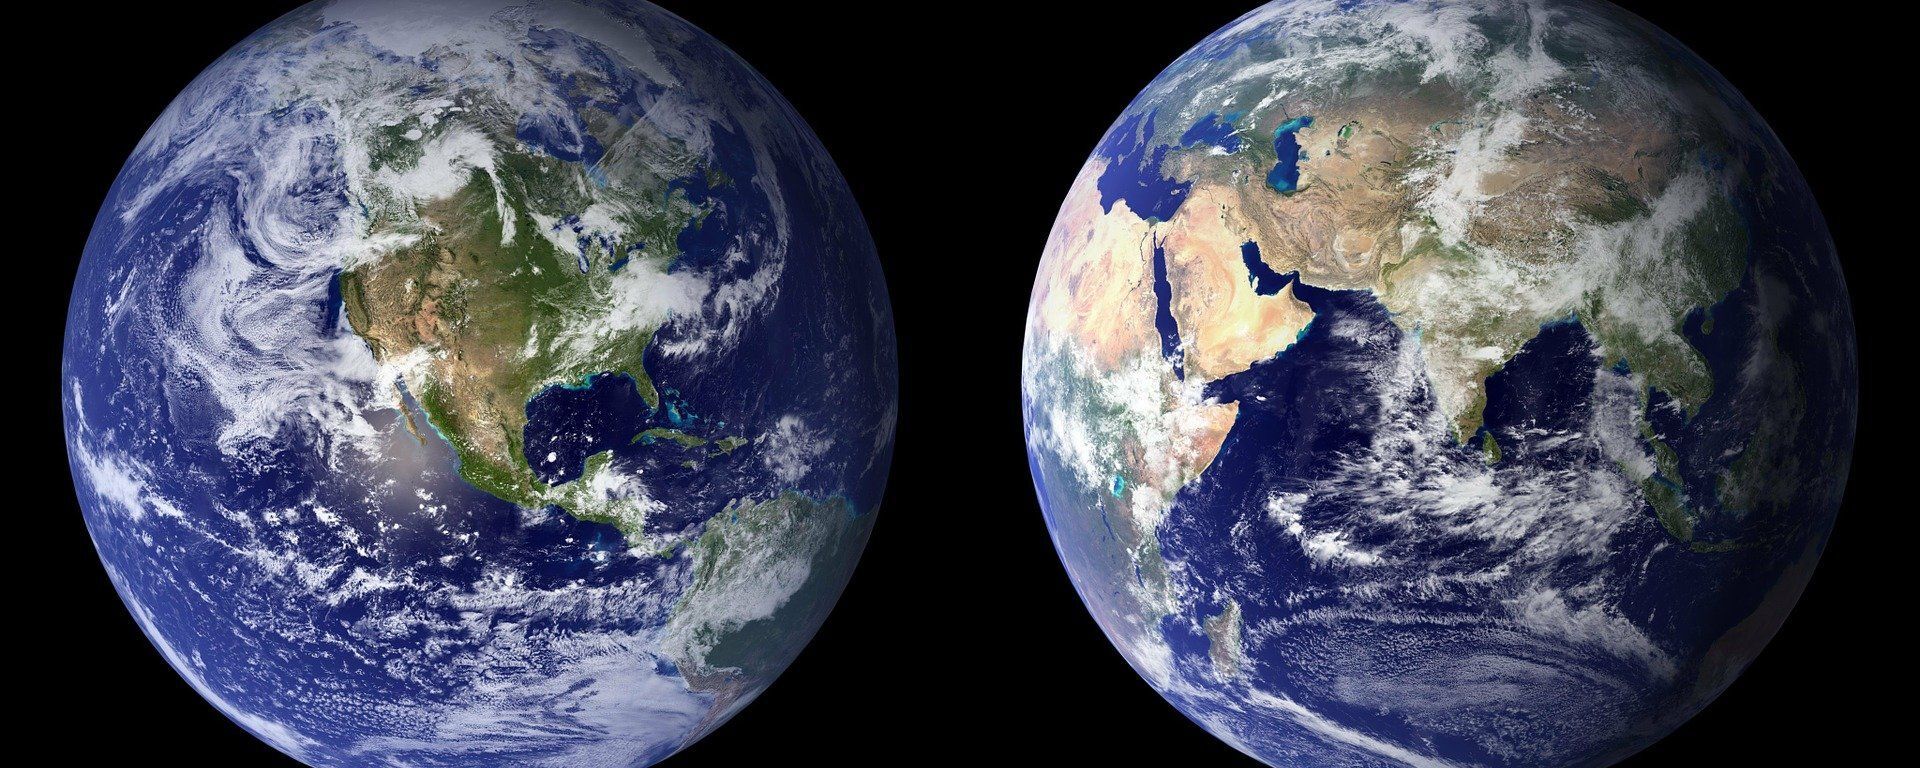 El planeta Tierra, referencial - Sputnik Mundo, 1920, 10.02.2021